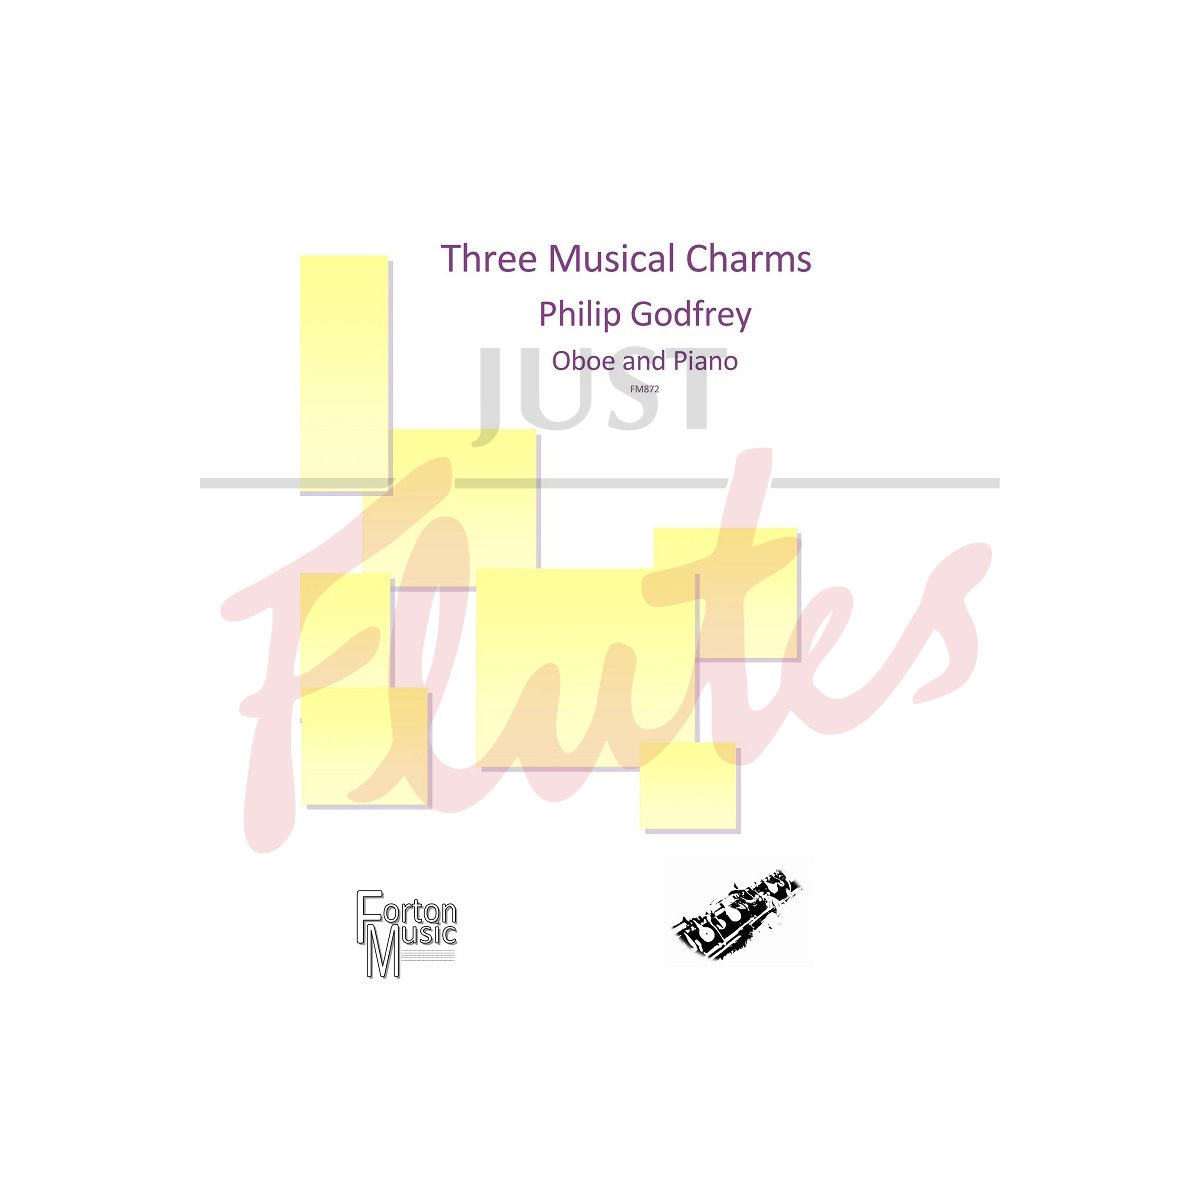 Three Musical Charms